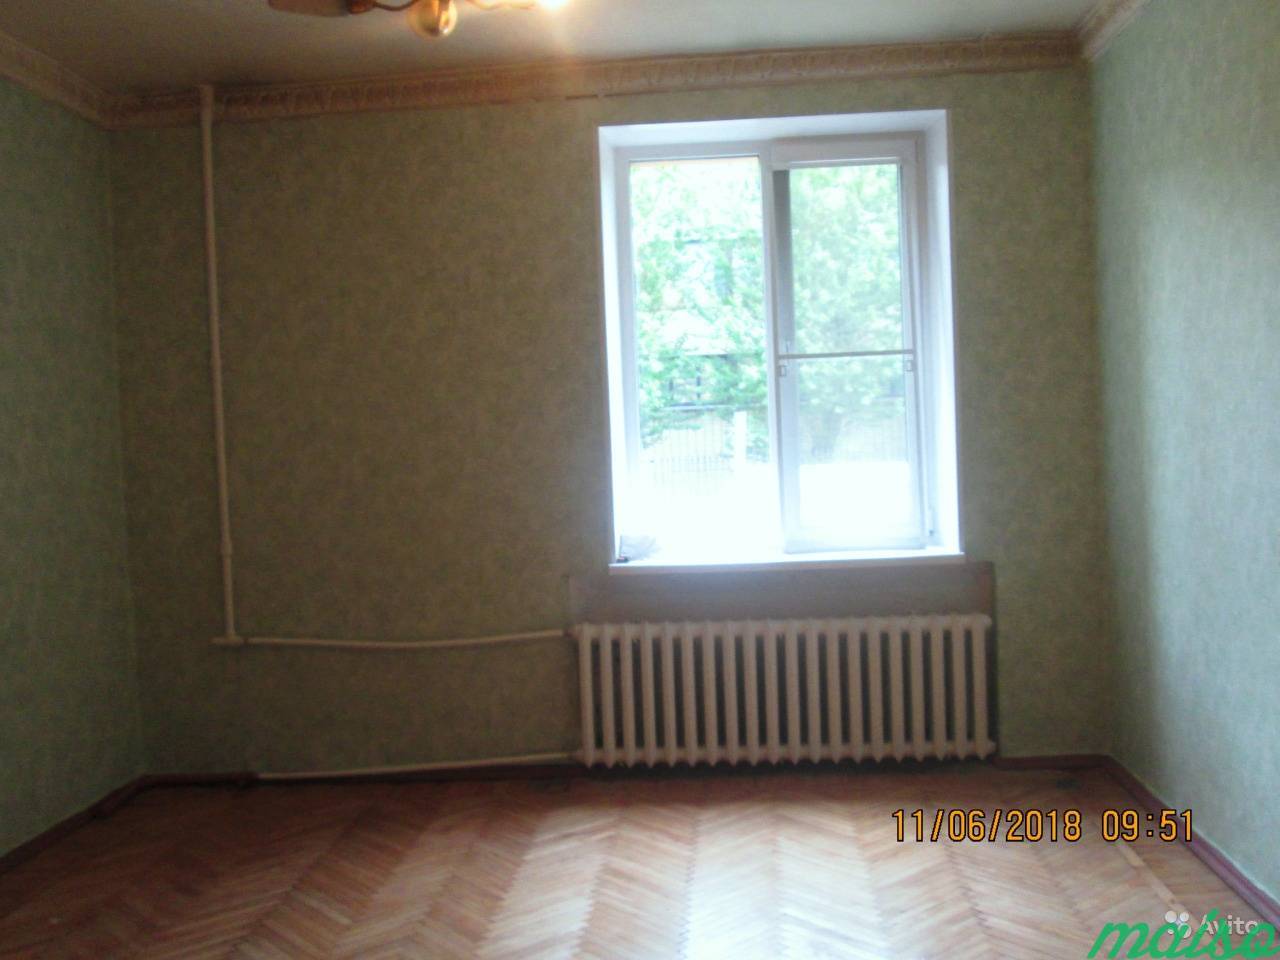 Комната 38 м² в 5-к, 1/5 эт. в Санкт-Петербурге. Фото 2